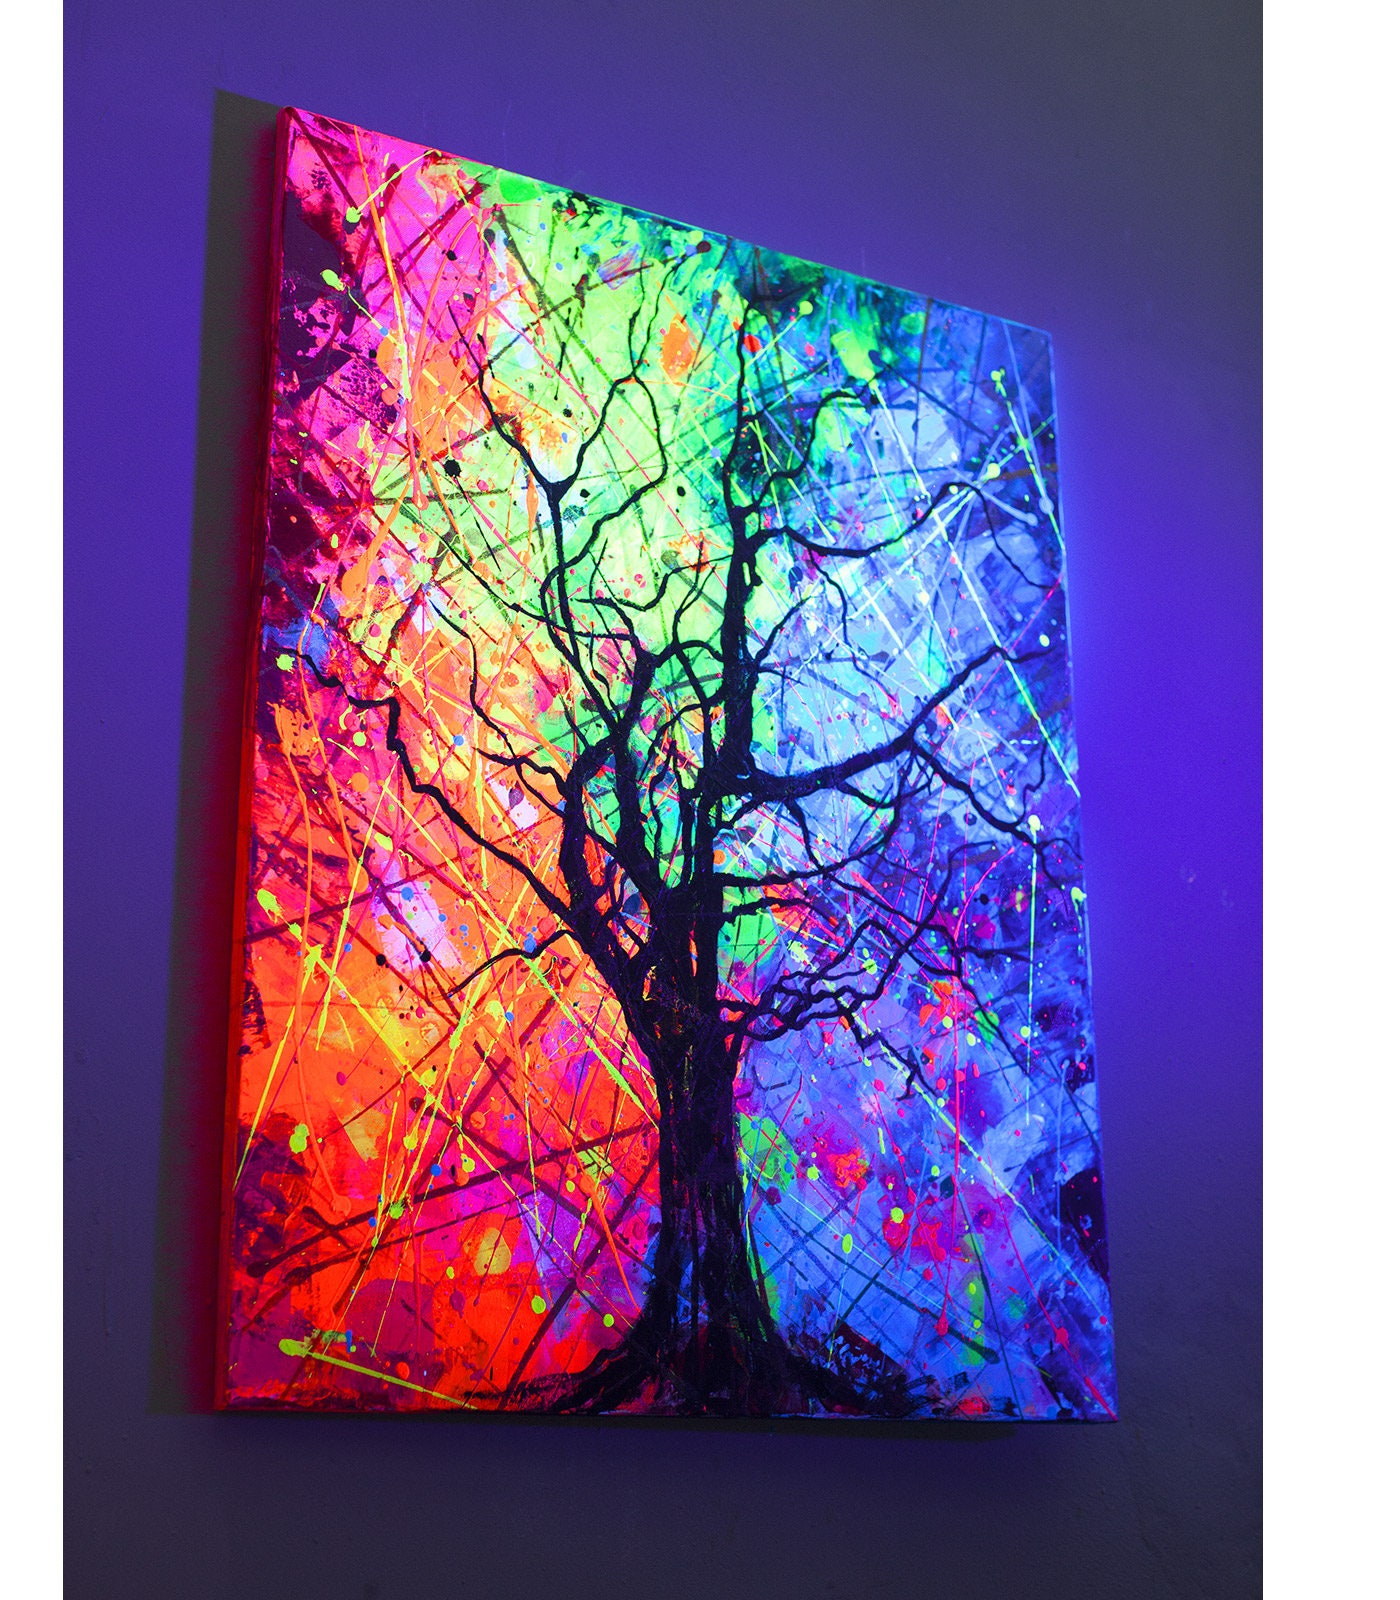 Buy Neon Art Abstract Painting on Canvas Modern Wall Art UV Glow